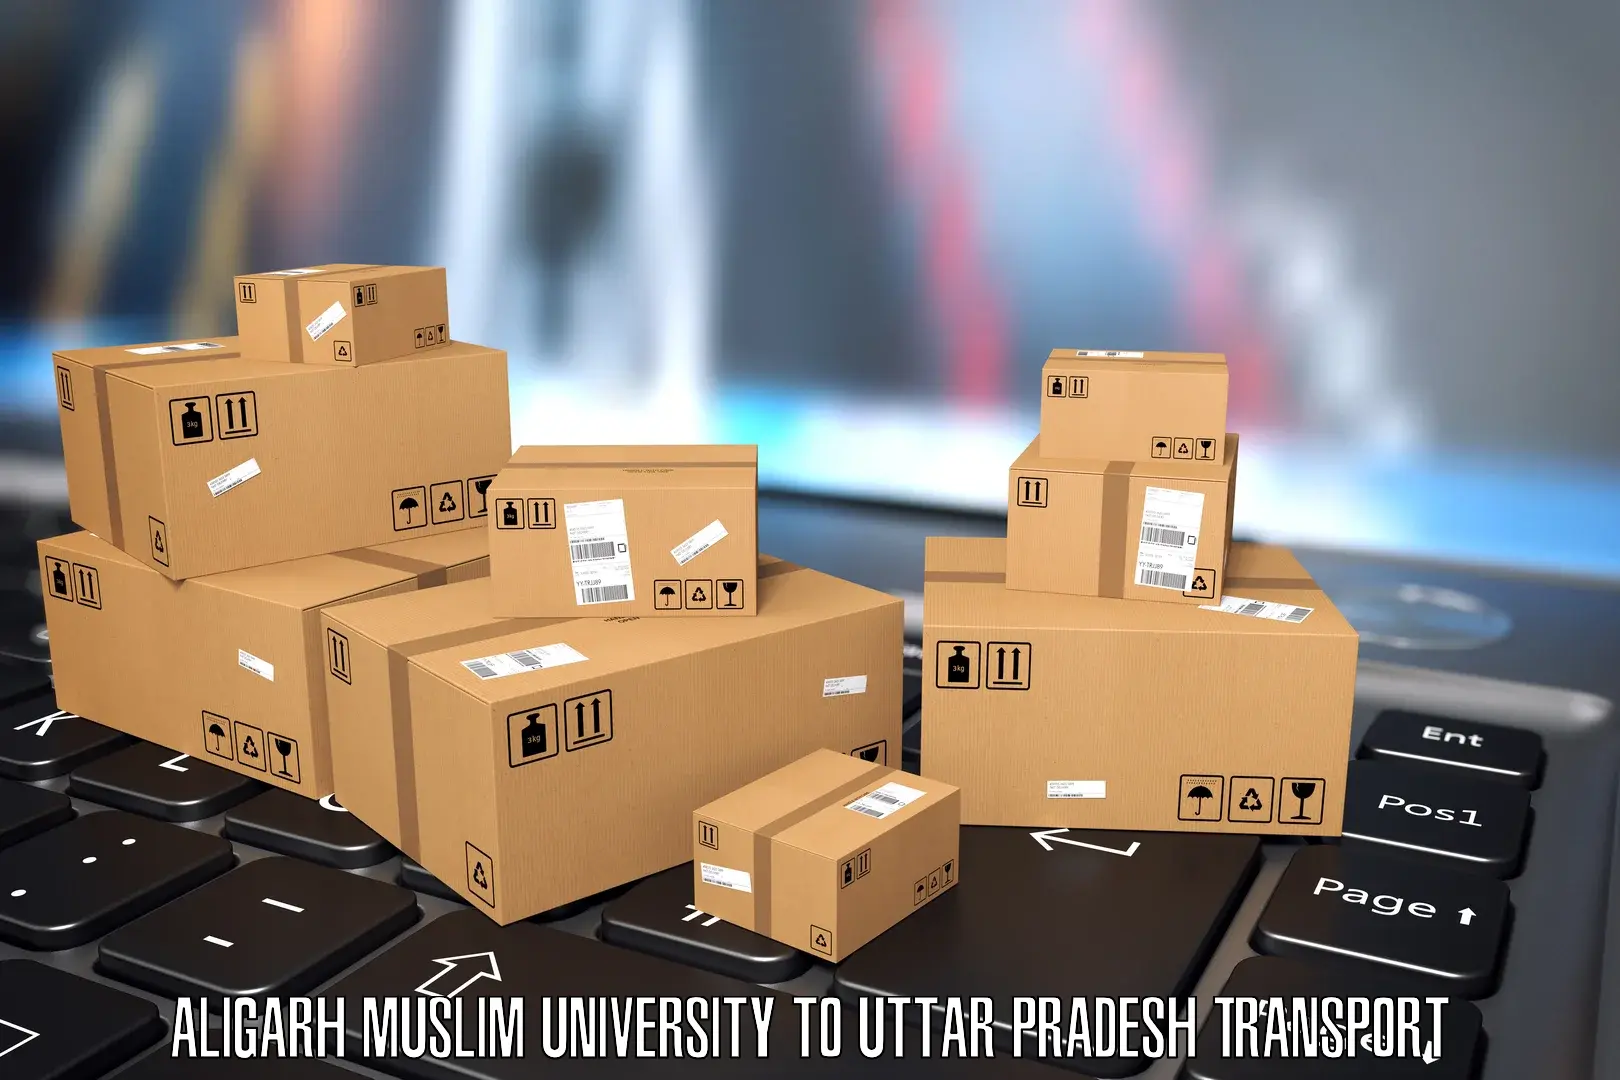 Container transport service Aligarh Muslim University to Kairana